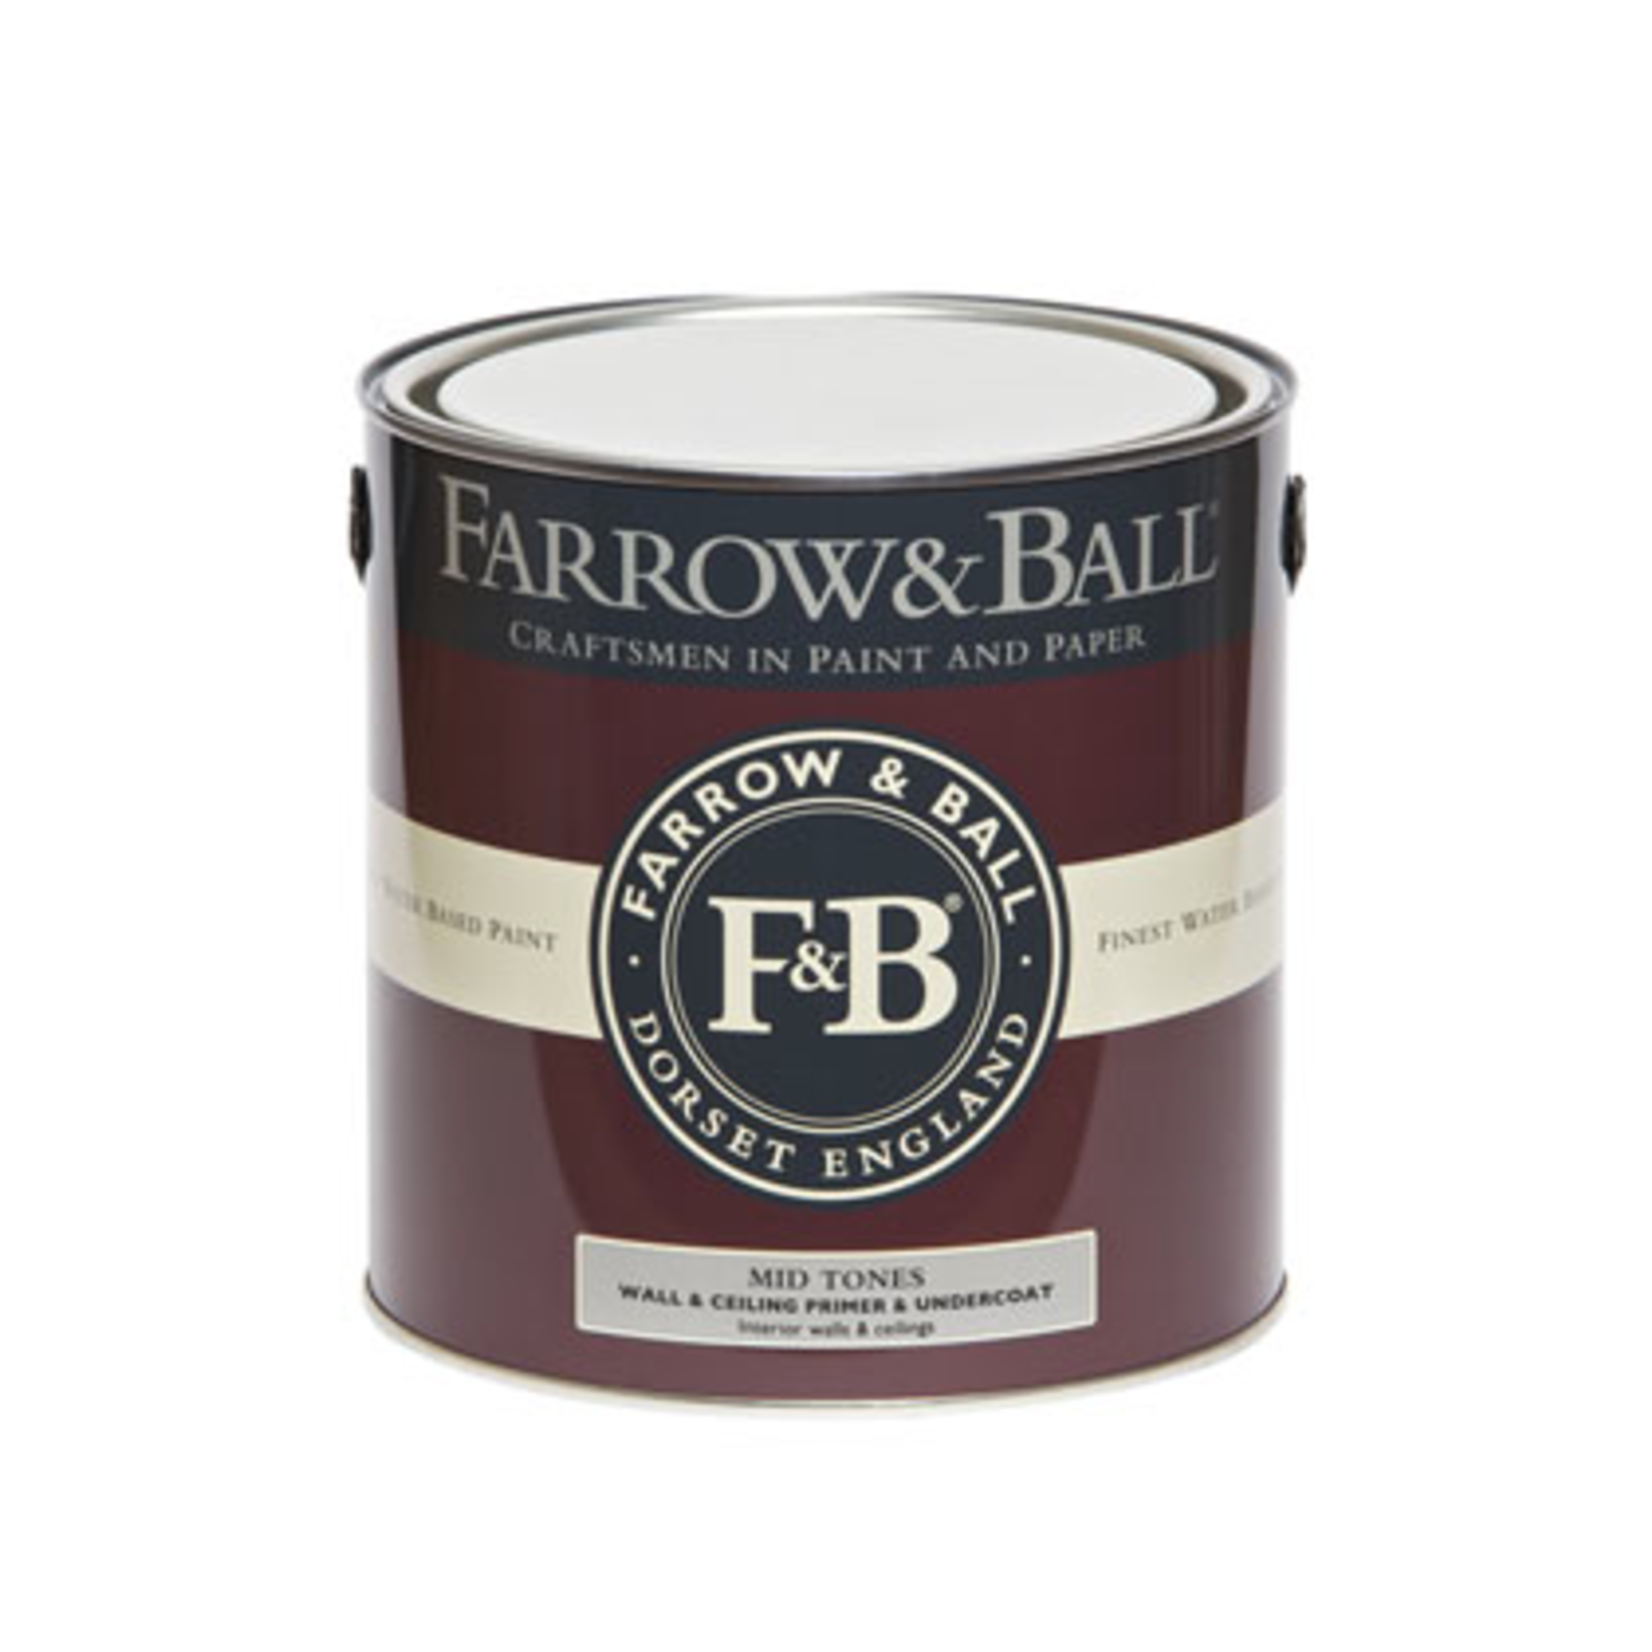 Farrow and Ball Gallon Wall & Ceiling Primer & U/C White & Light Tones